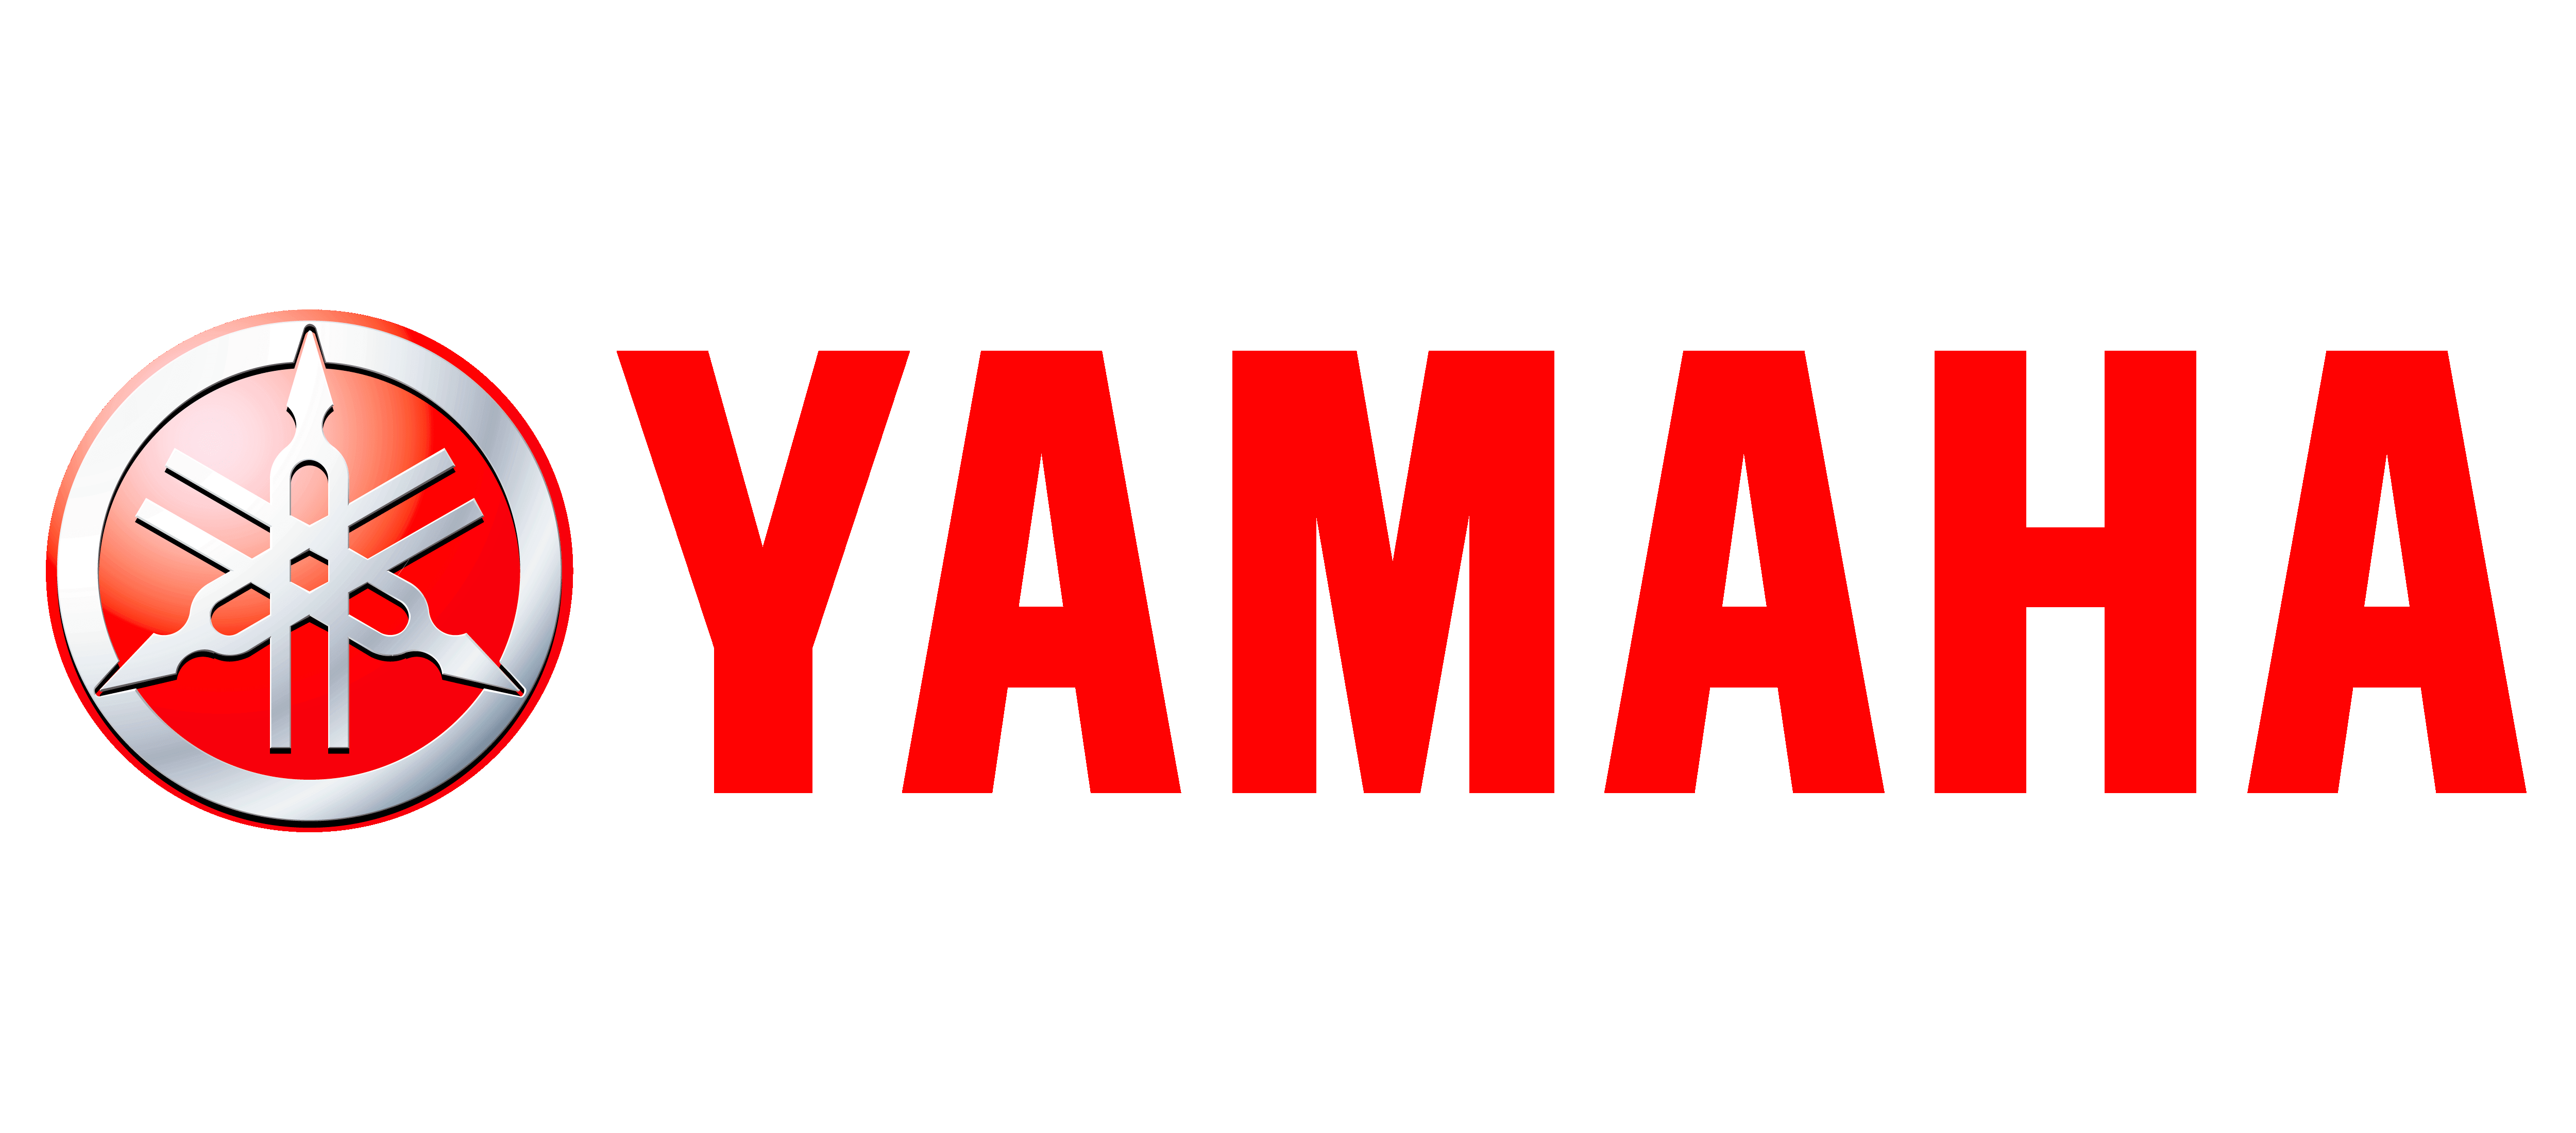 Motorcycle Company Logo - Yamaha Logo. Bikes. Yamaha logo, Motorcycle logo, Yamaha